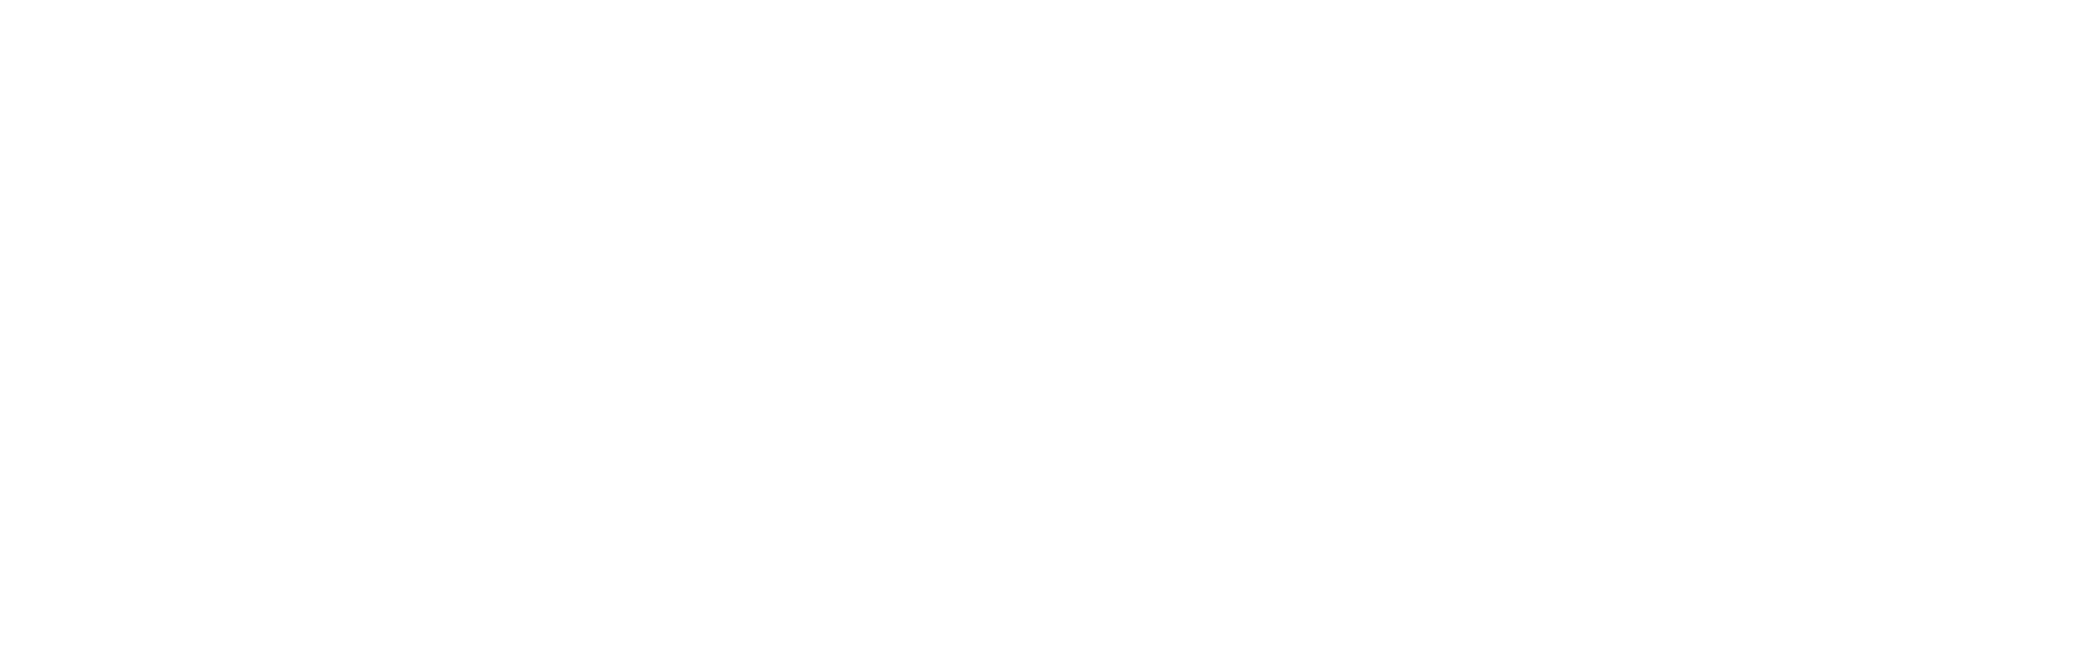 Amazon Music Logo - Highest Quality Streaming Audio. Amazon Music HD